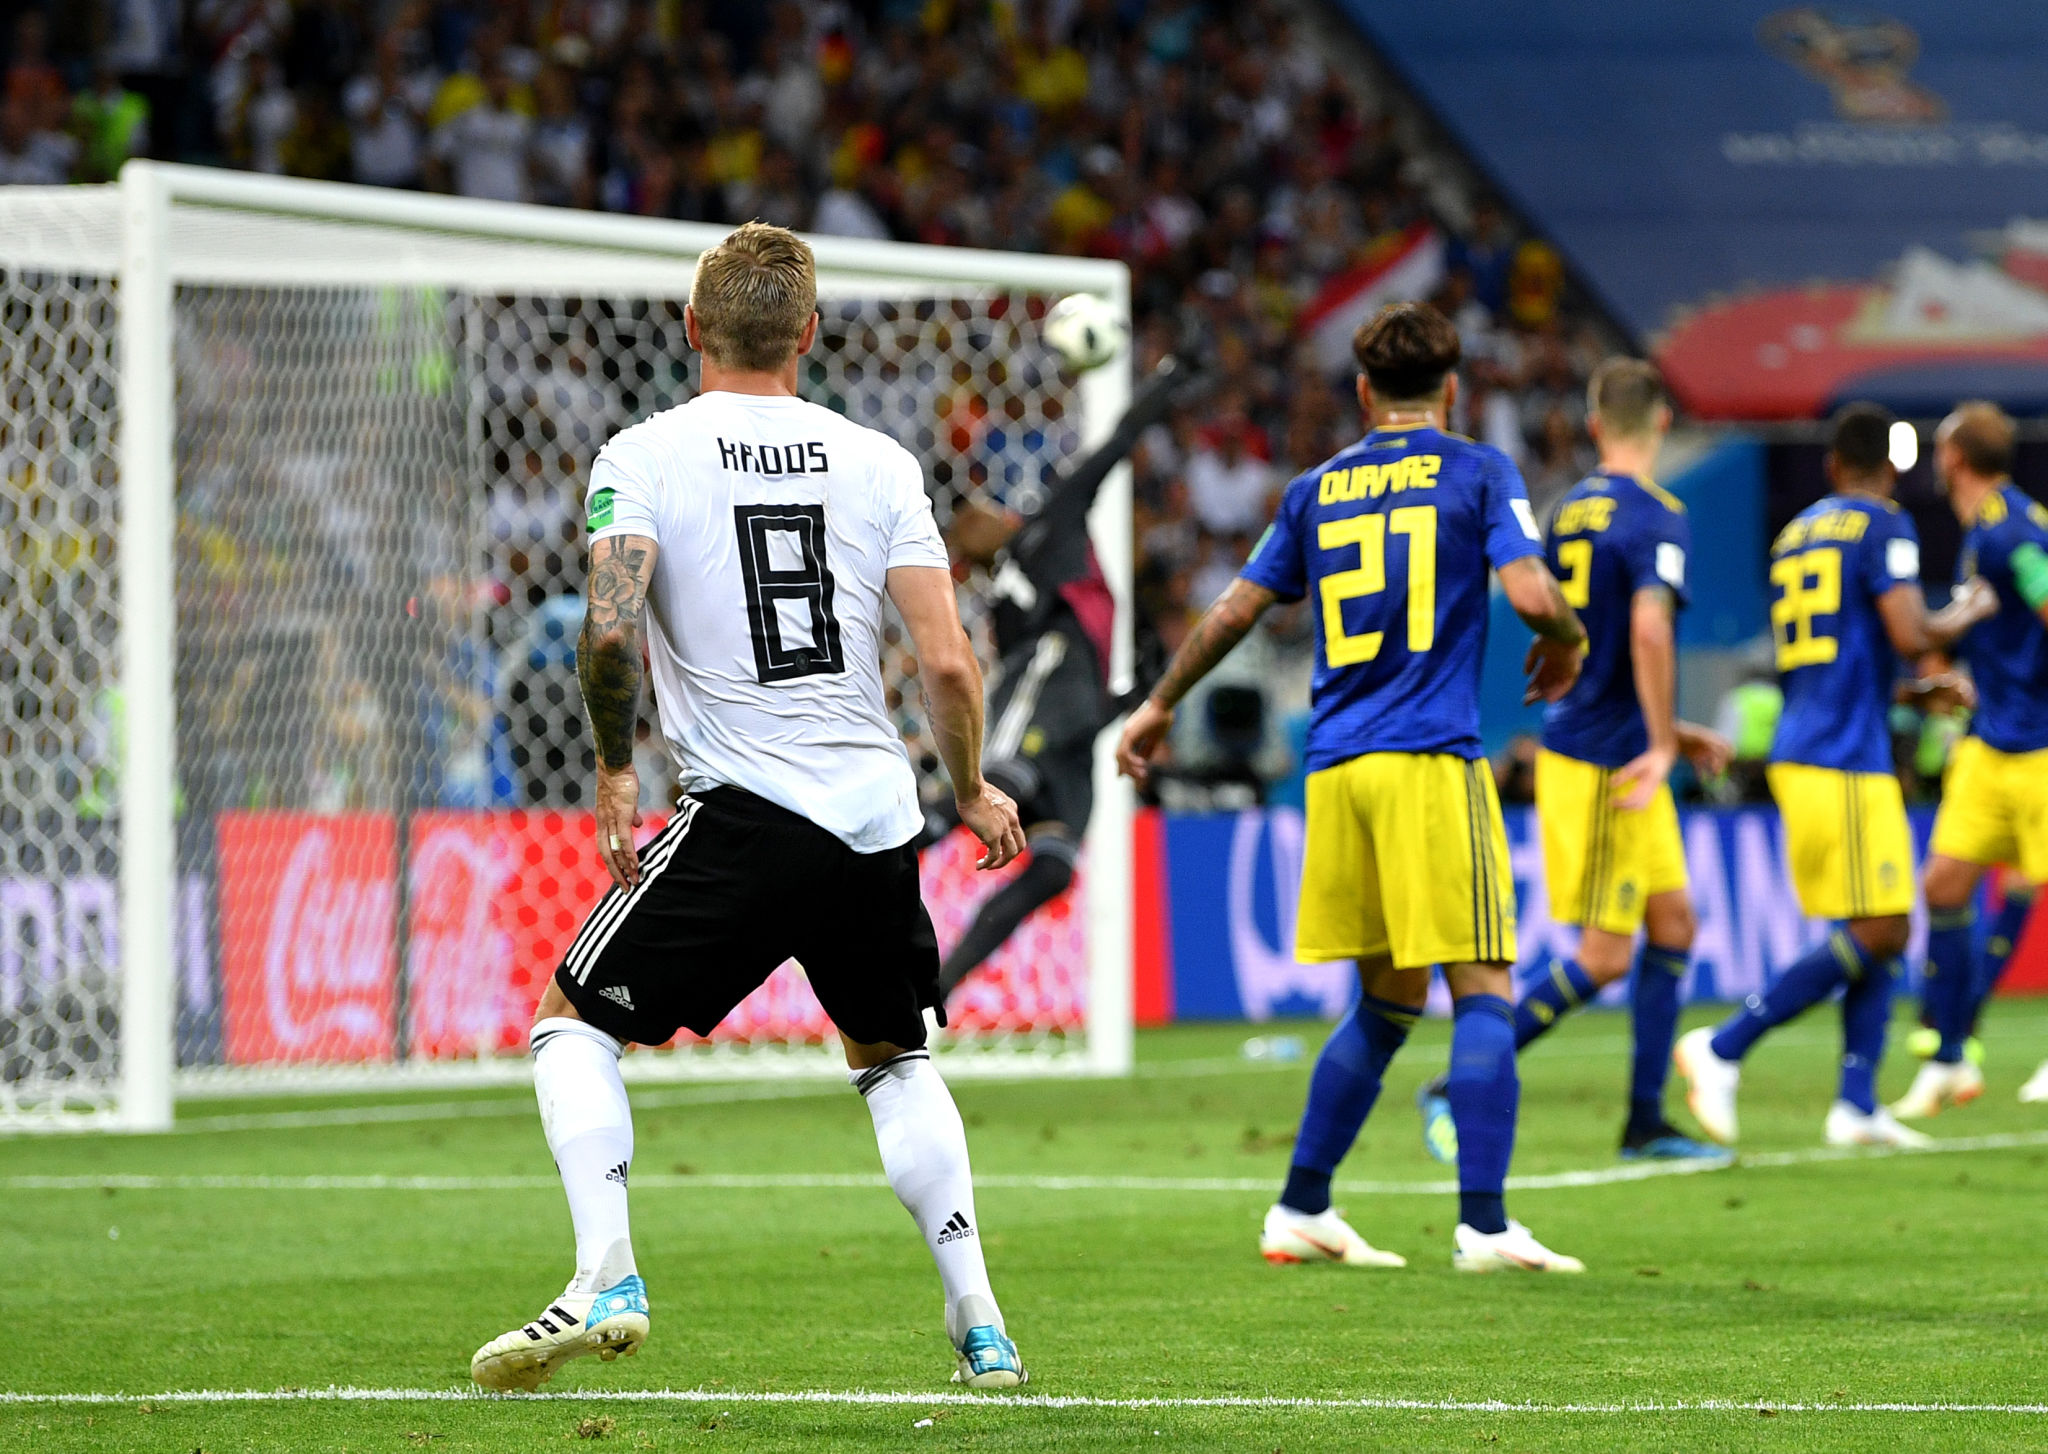 آلمان 2-1 سوئد